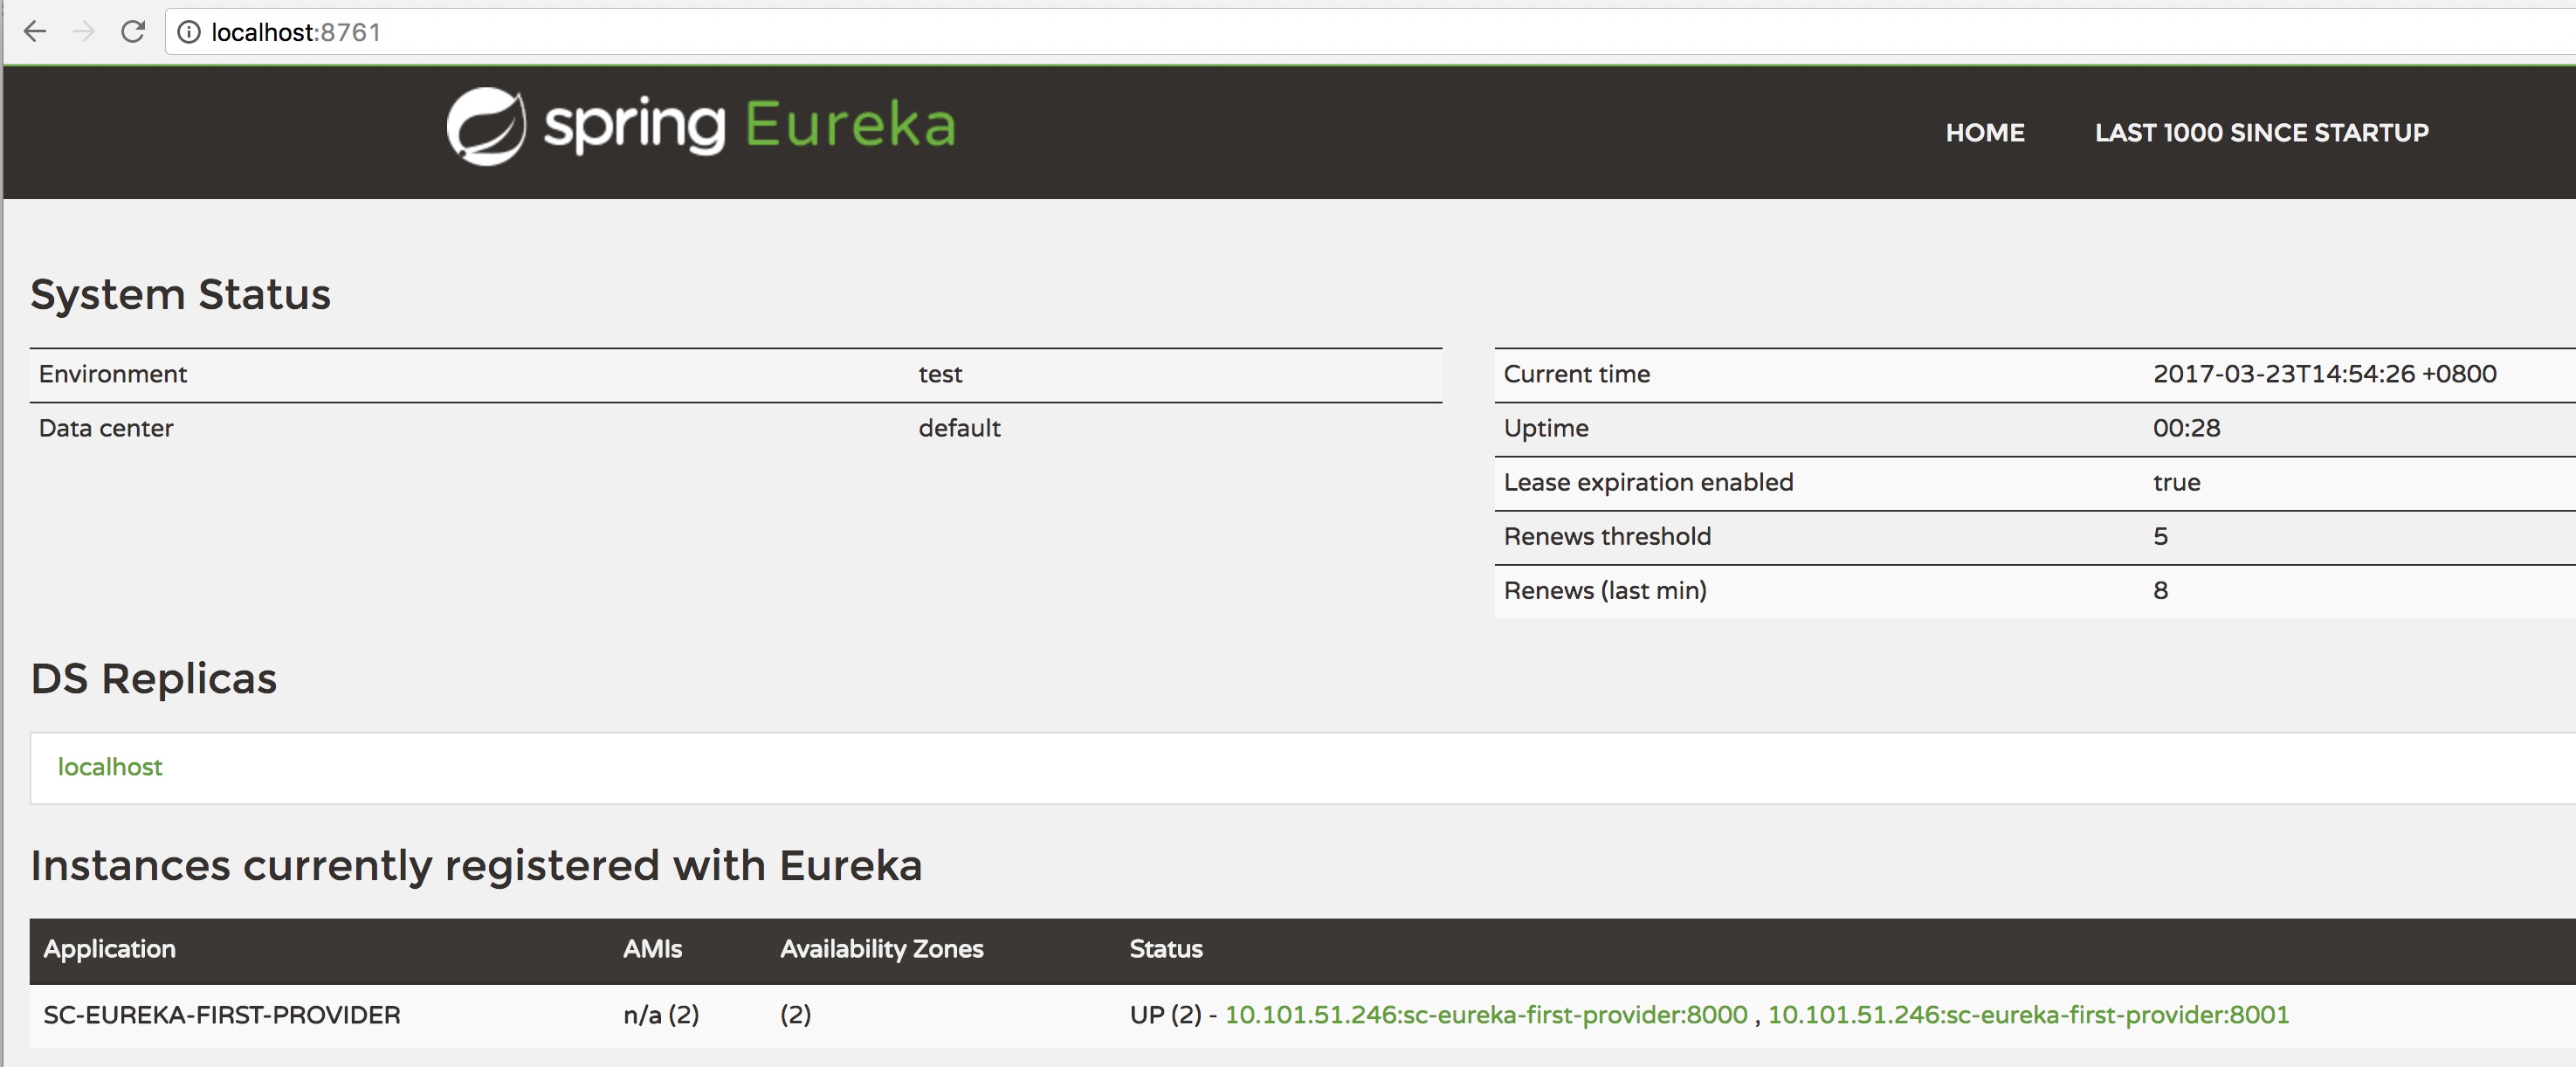 Eureka Server